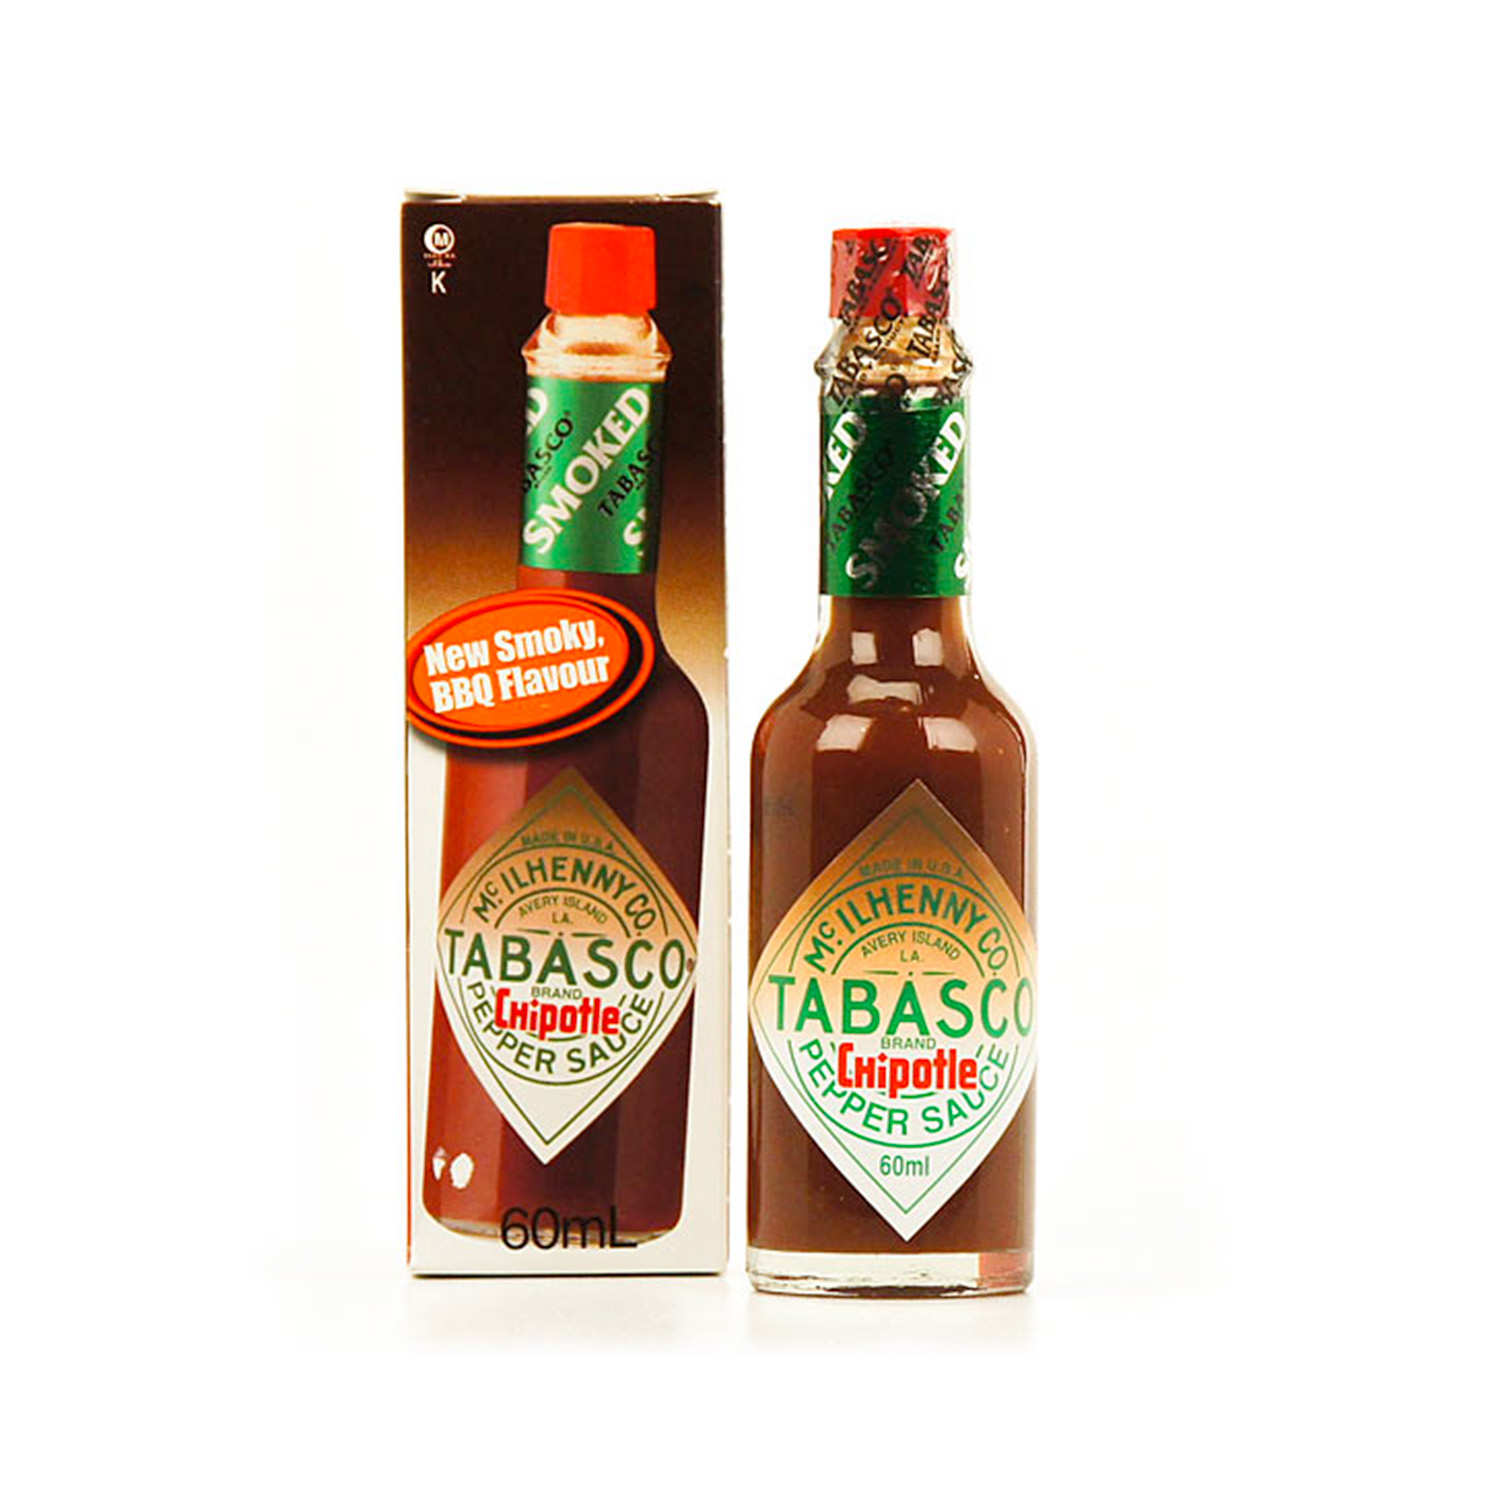 Tabasco Chipotle - Sauce piquante fumée - Mc Ilhenny - Tabasco brand